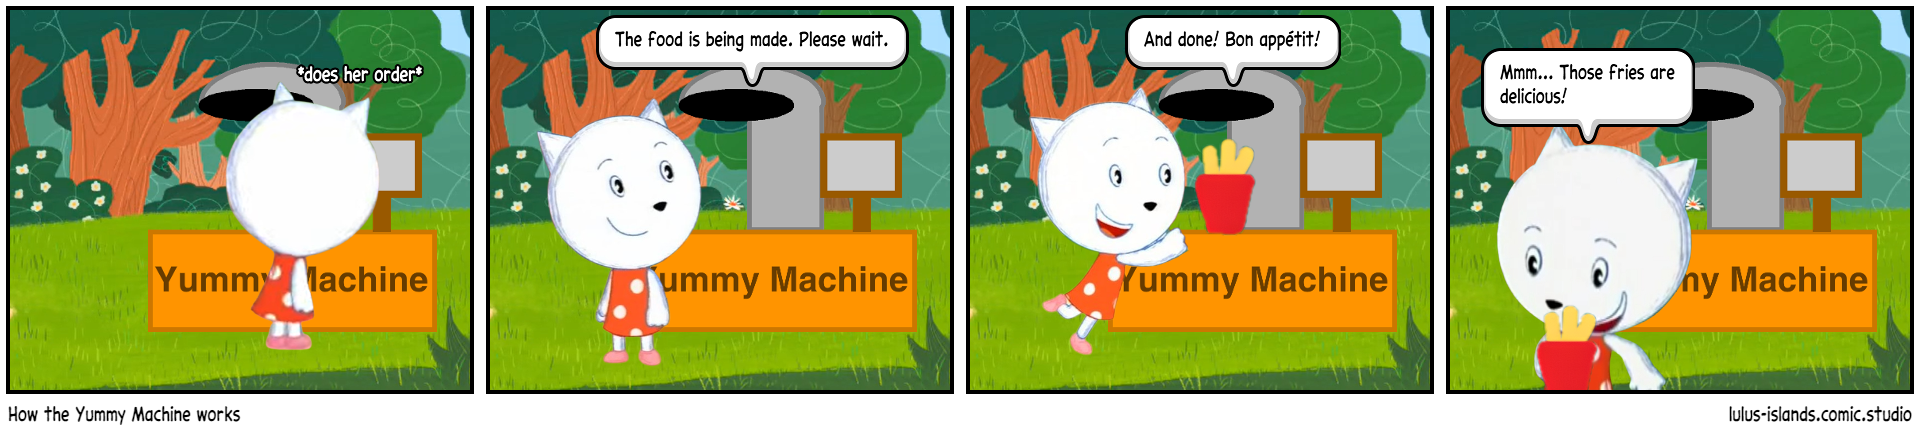 How the Yummy Machine works